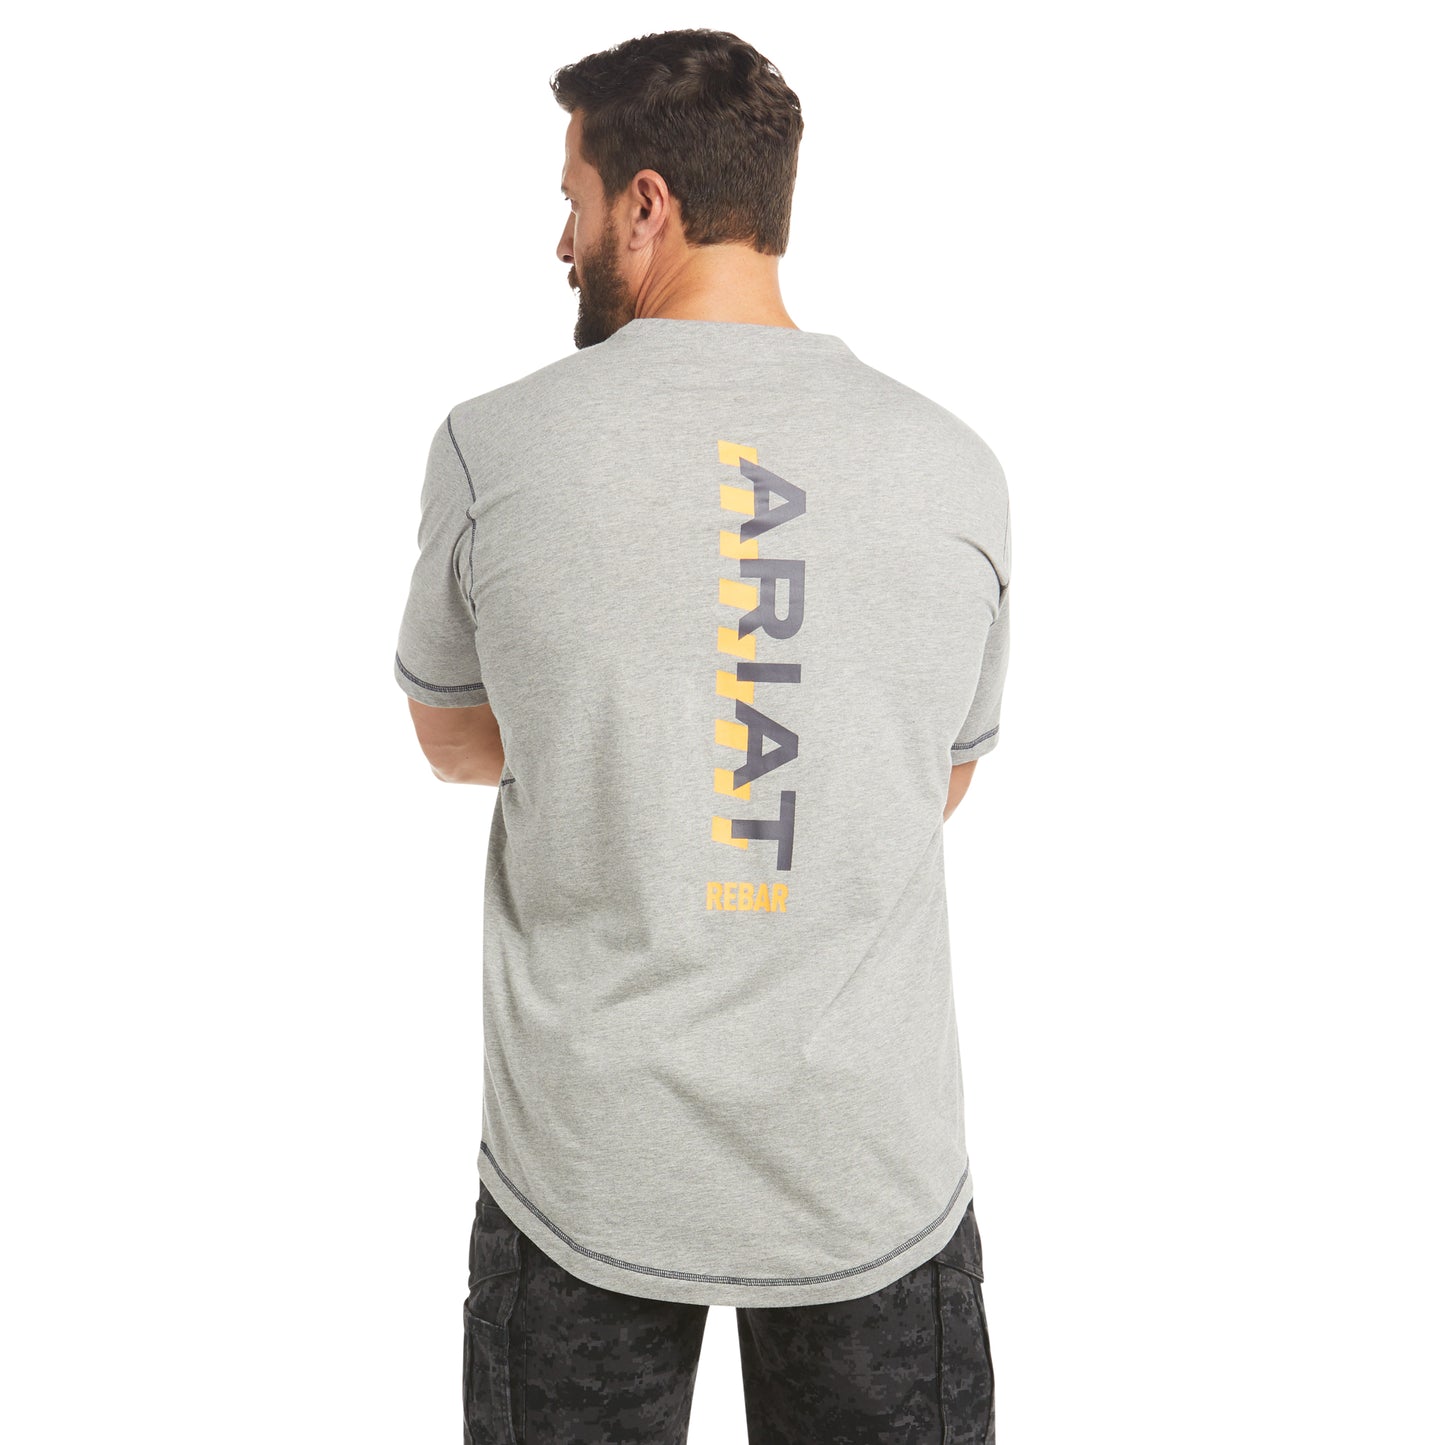 Ariat® Men's Rebar Workman Logo Tee Heather Grey 10035400